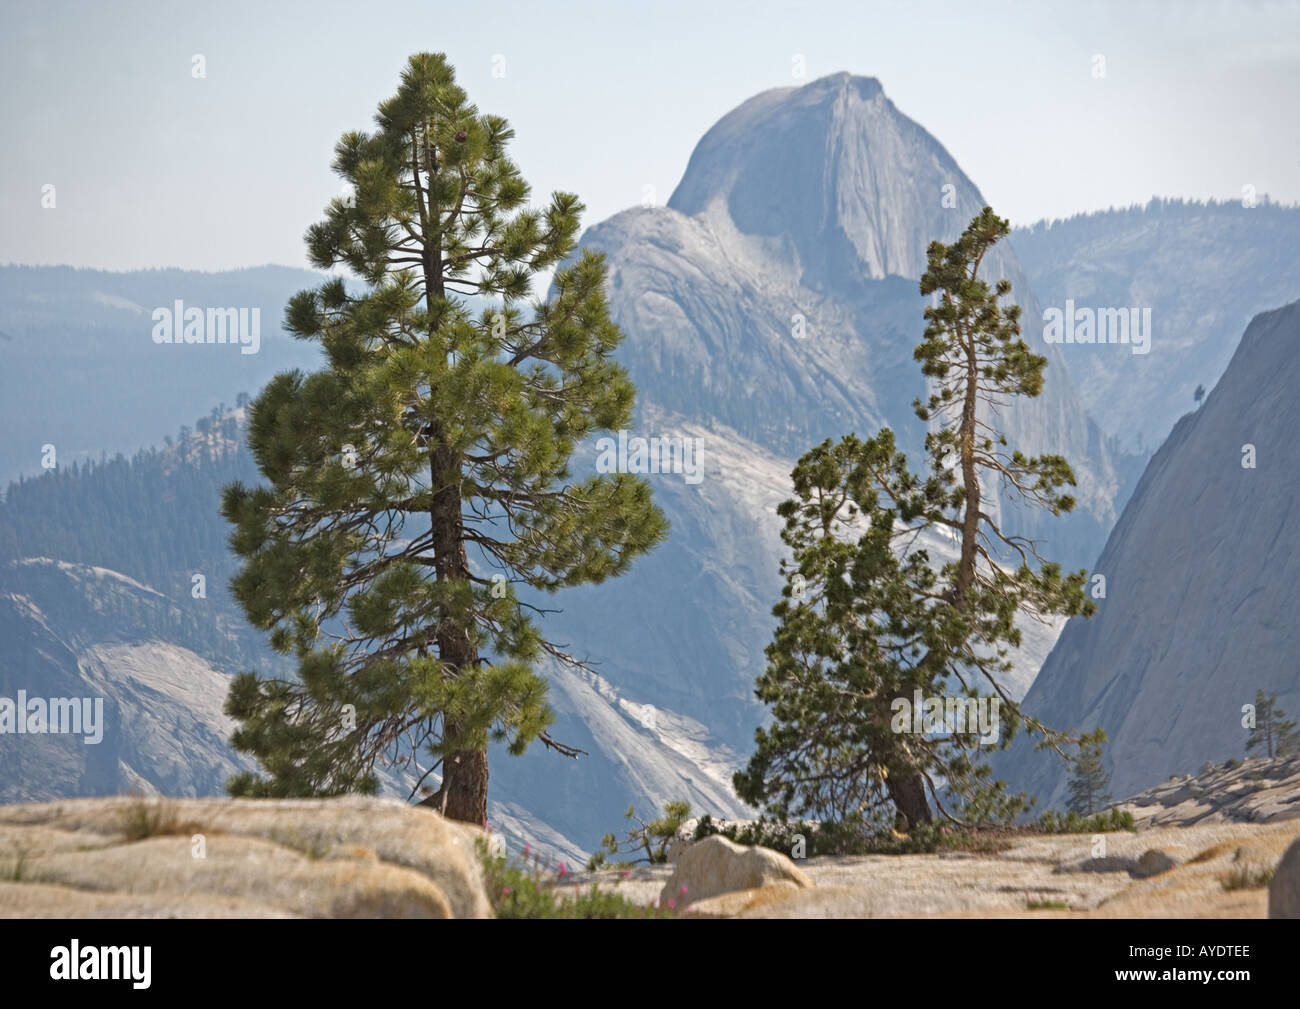 Yosemite National Park, Half dome seen through jeffrey and whitebark pine trees (Pinus jeffreyi) Stock Photo